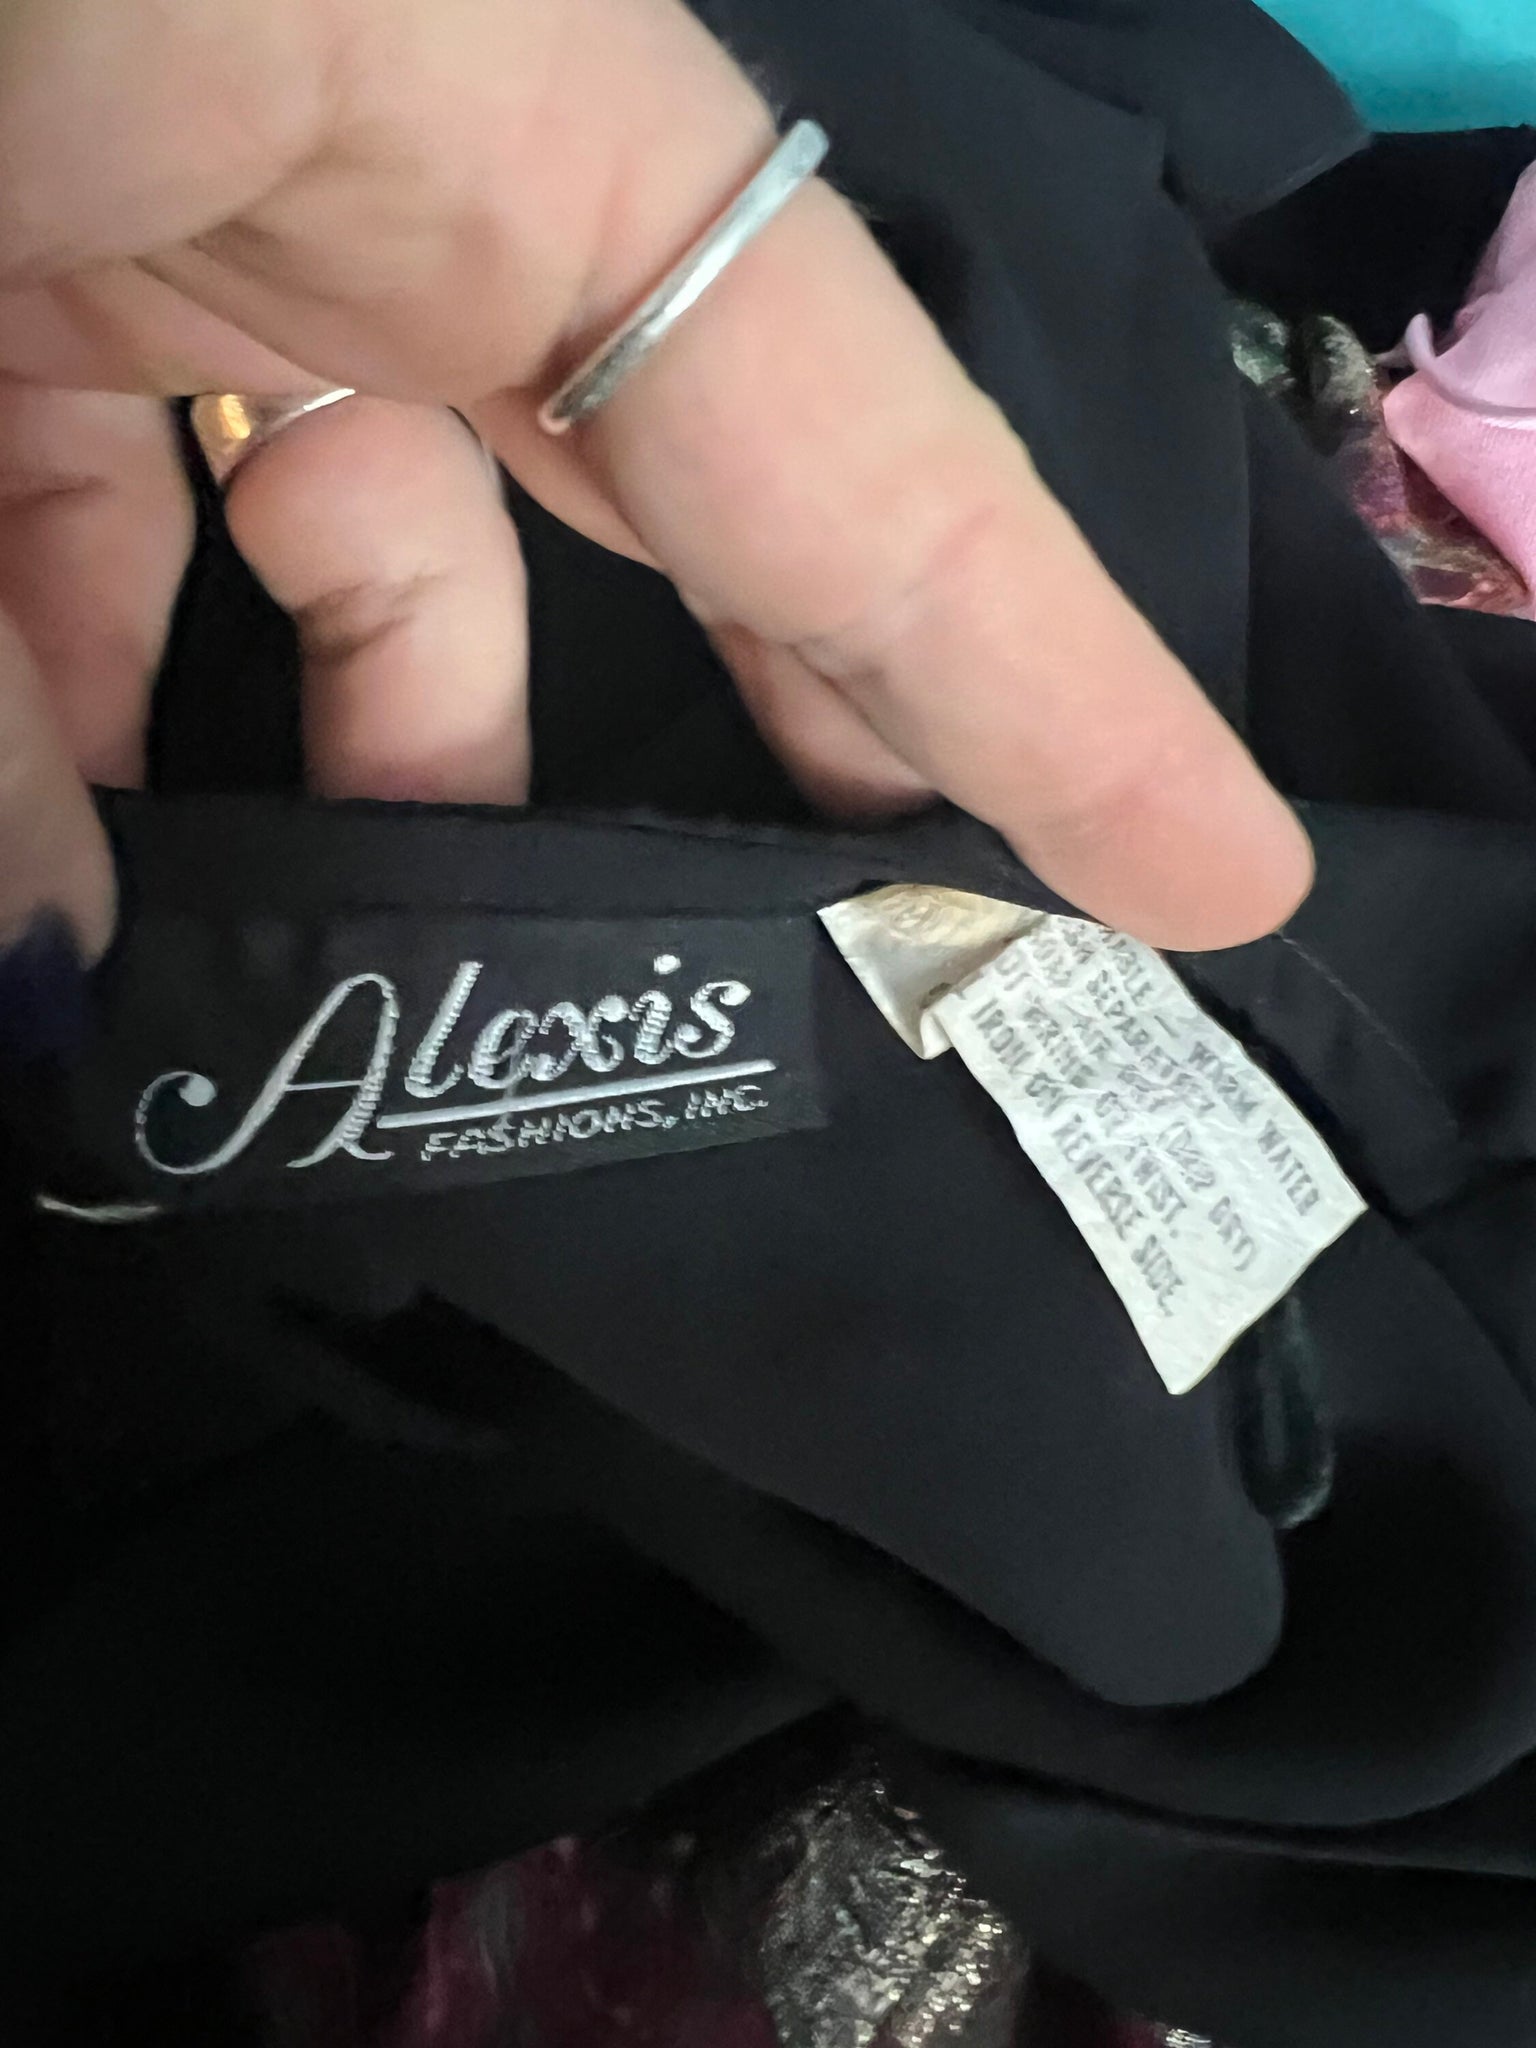 Vintage sheer black 70's wrap top dress Alexis M